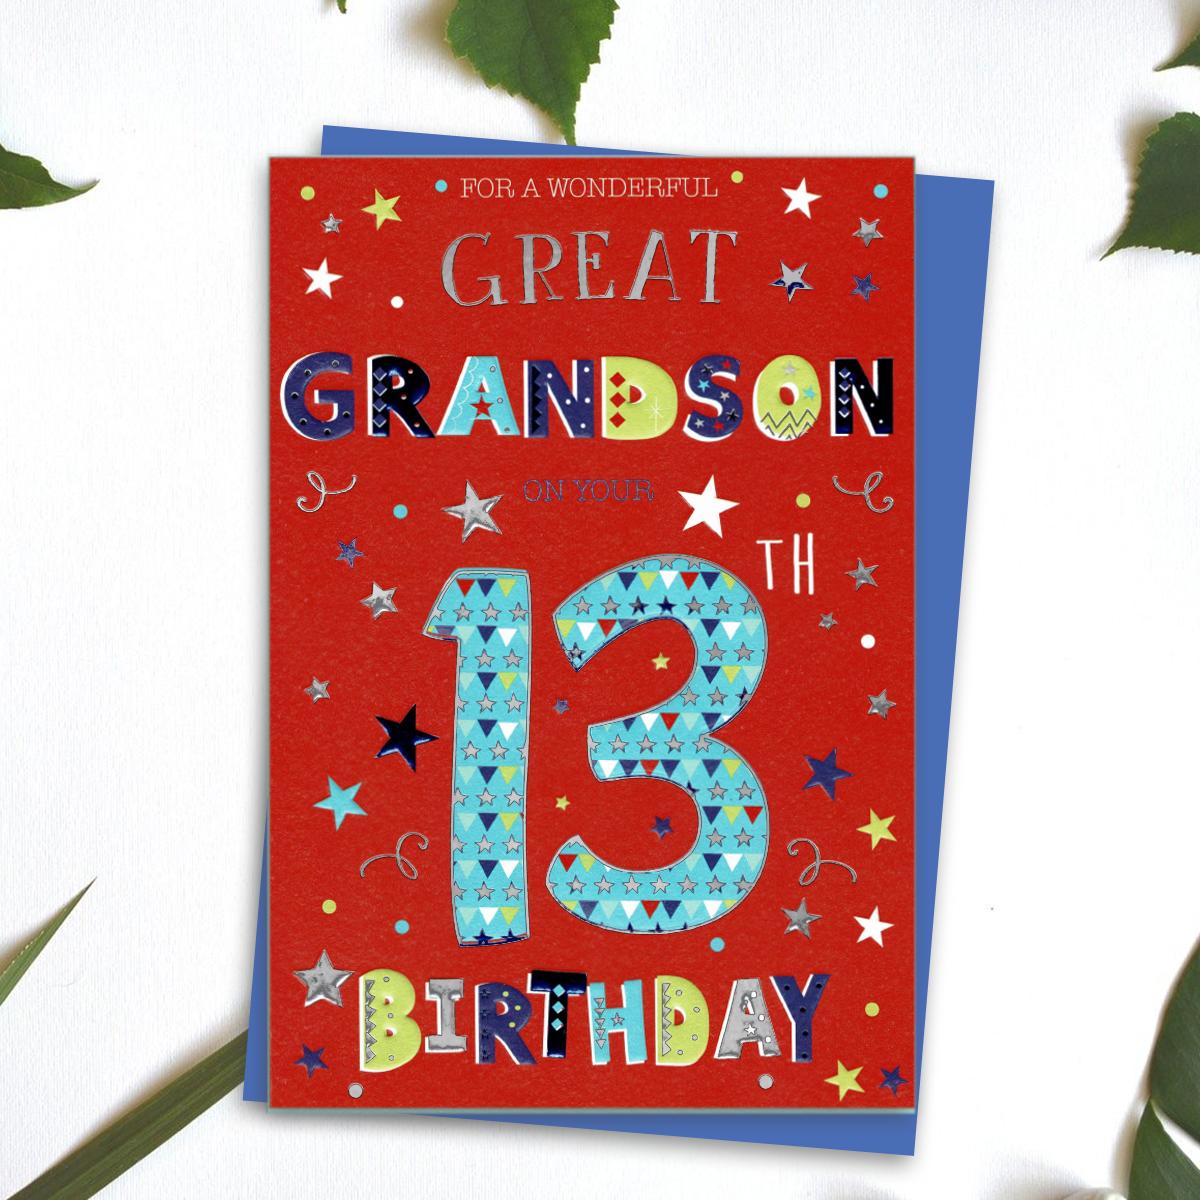 Great Grandson Age 13 Birthday Card Alongside Its Blue Envelope